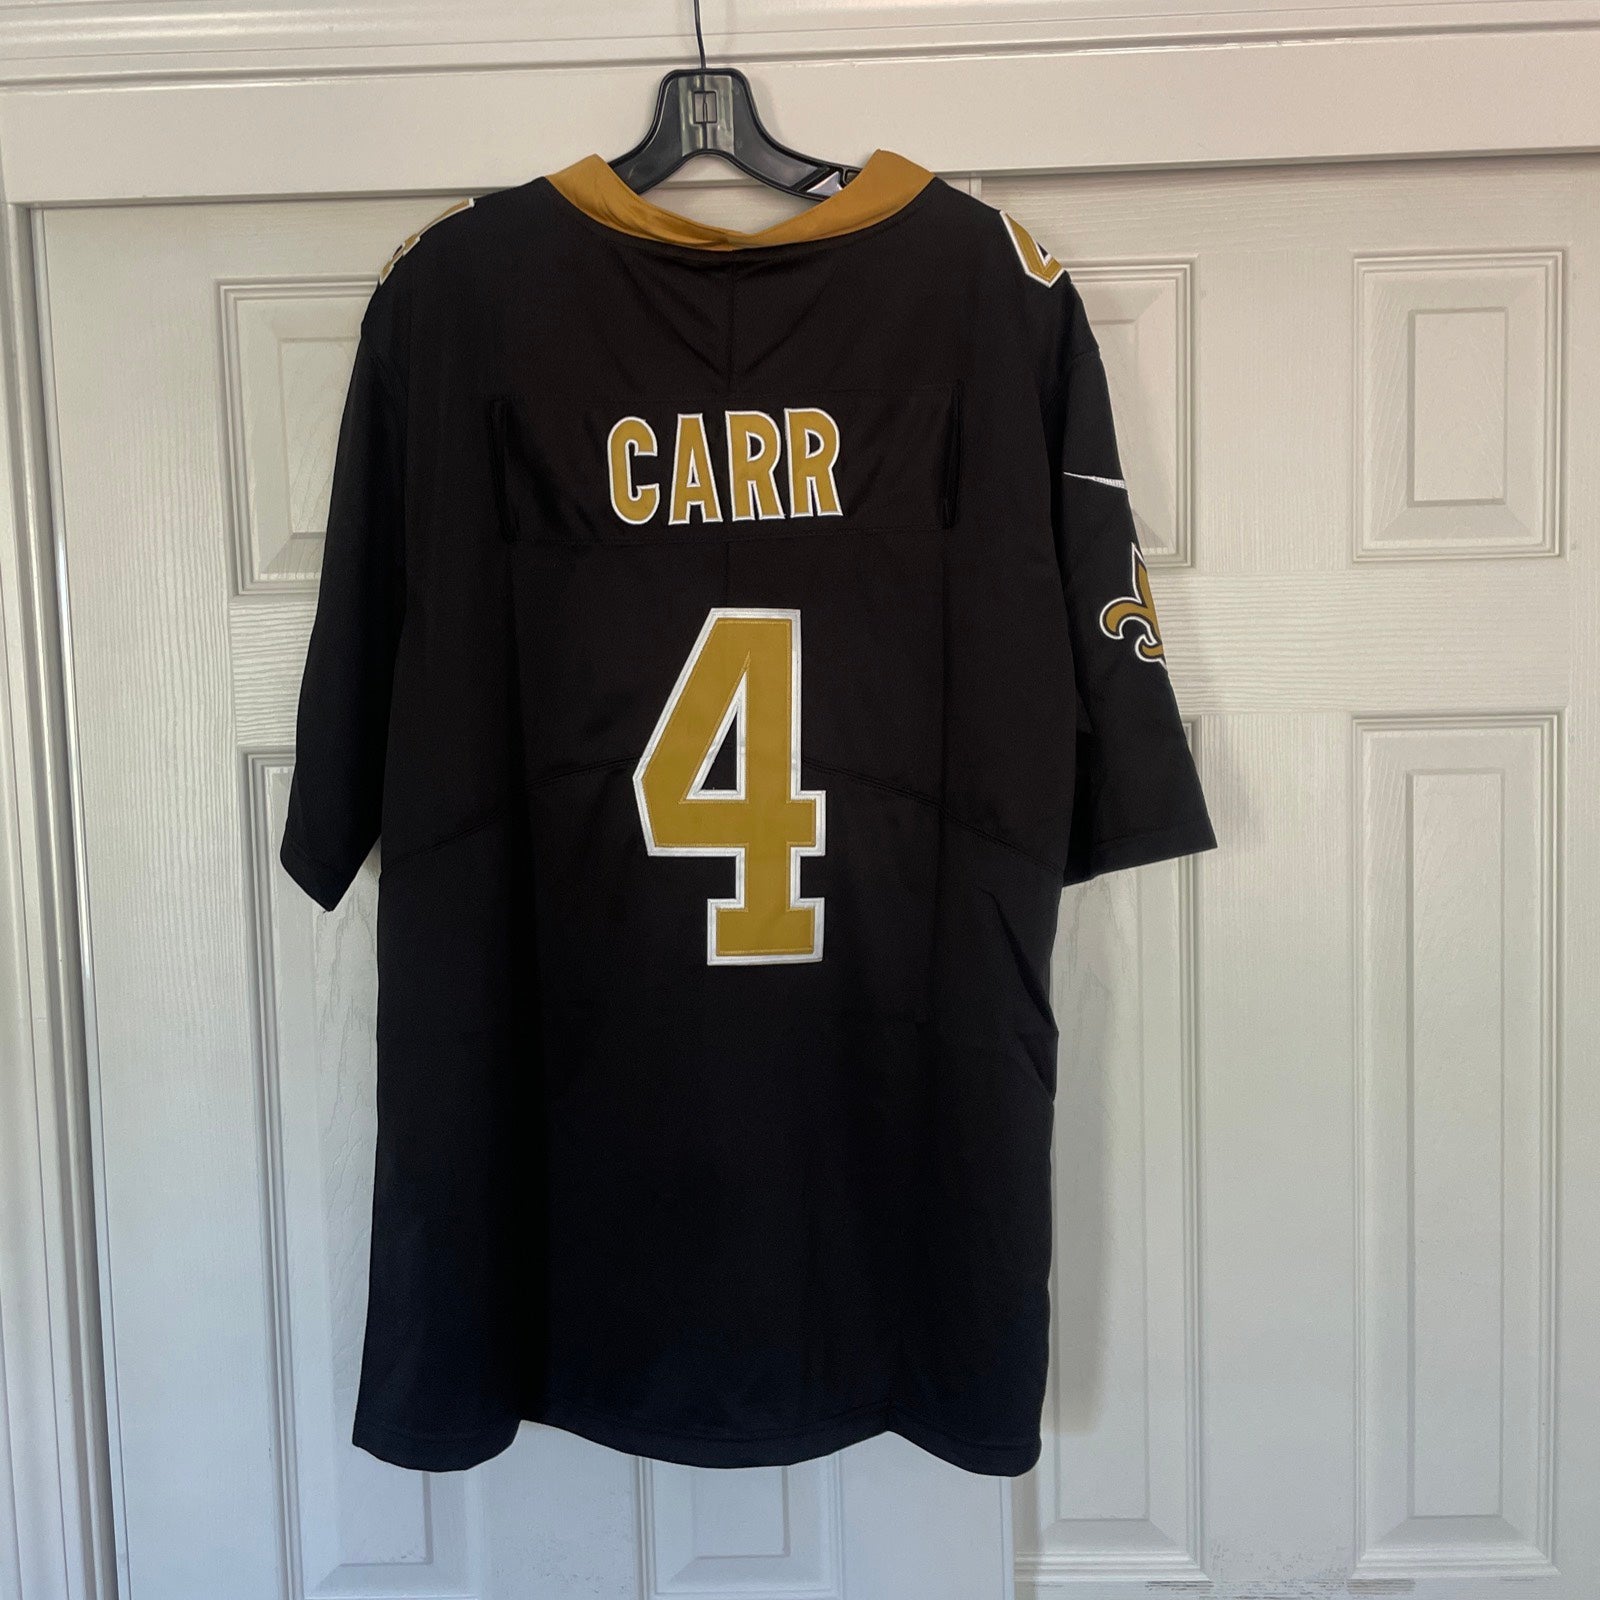 Derek Carr Oakland Raiders Black Elite jersey